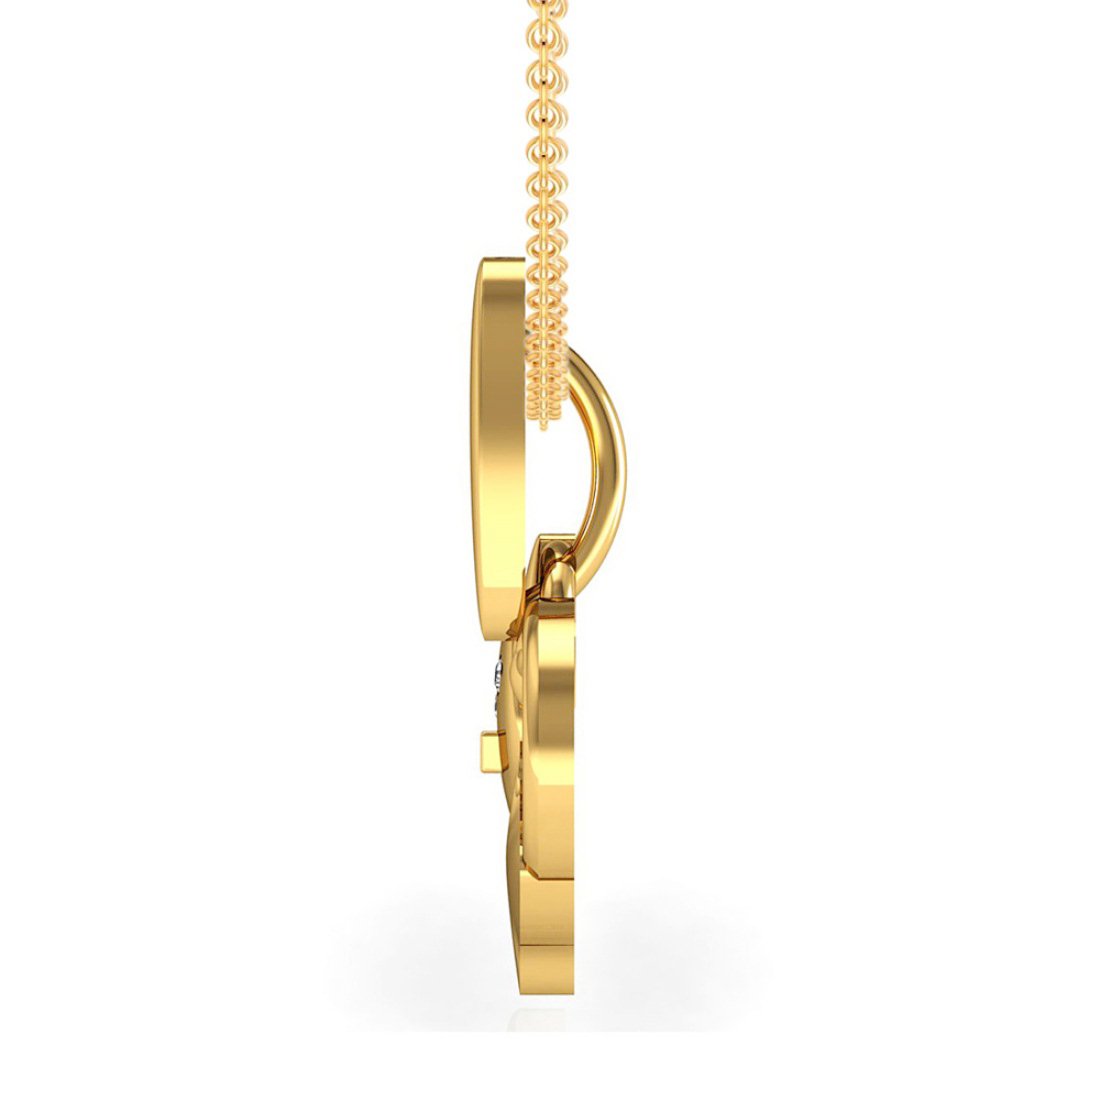 Diamond eye cat shape kids pendant with chain, 18k Gold jewelry